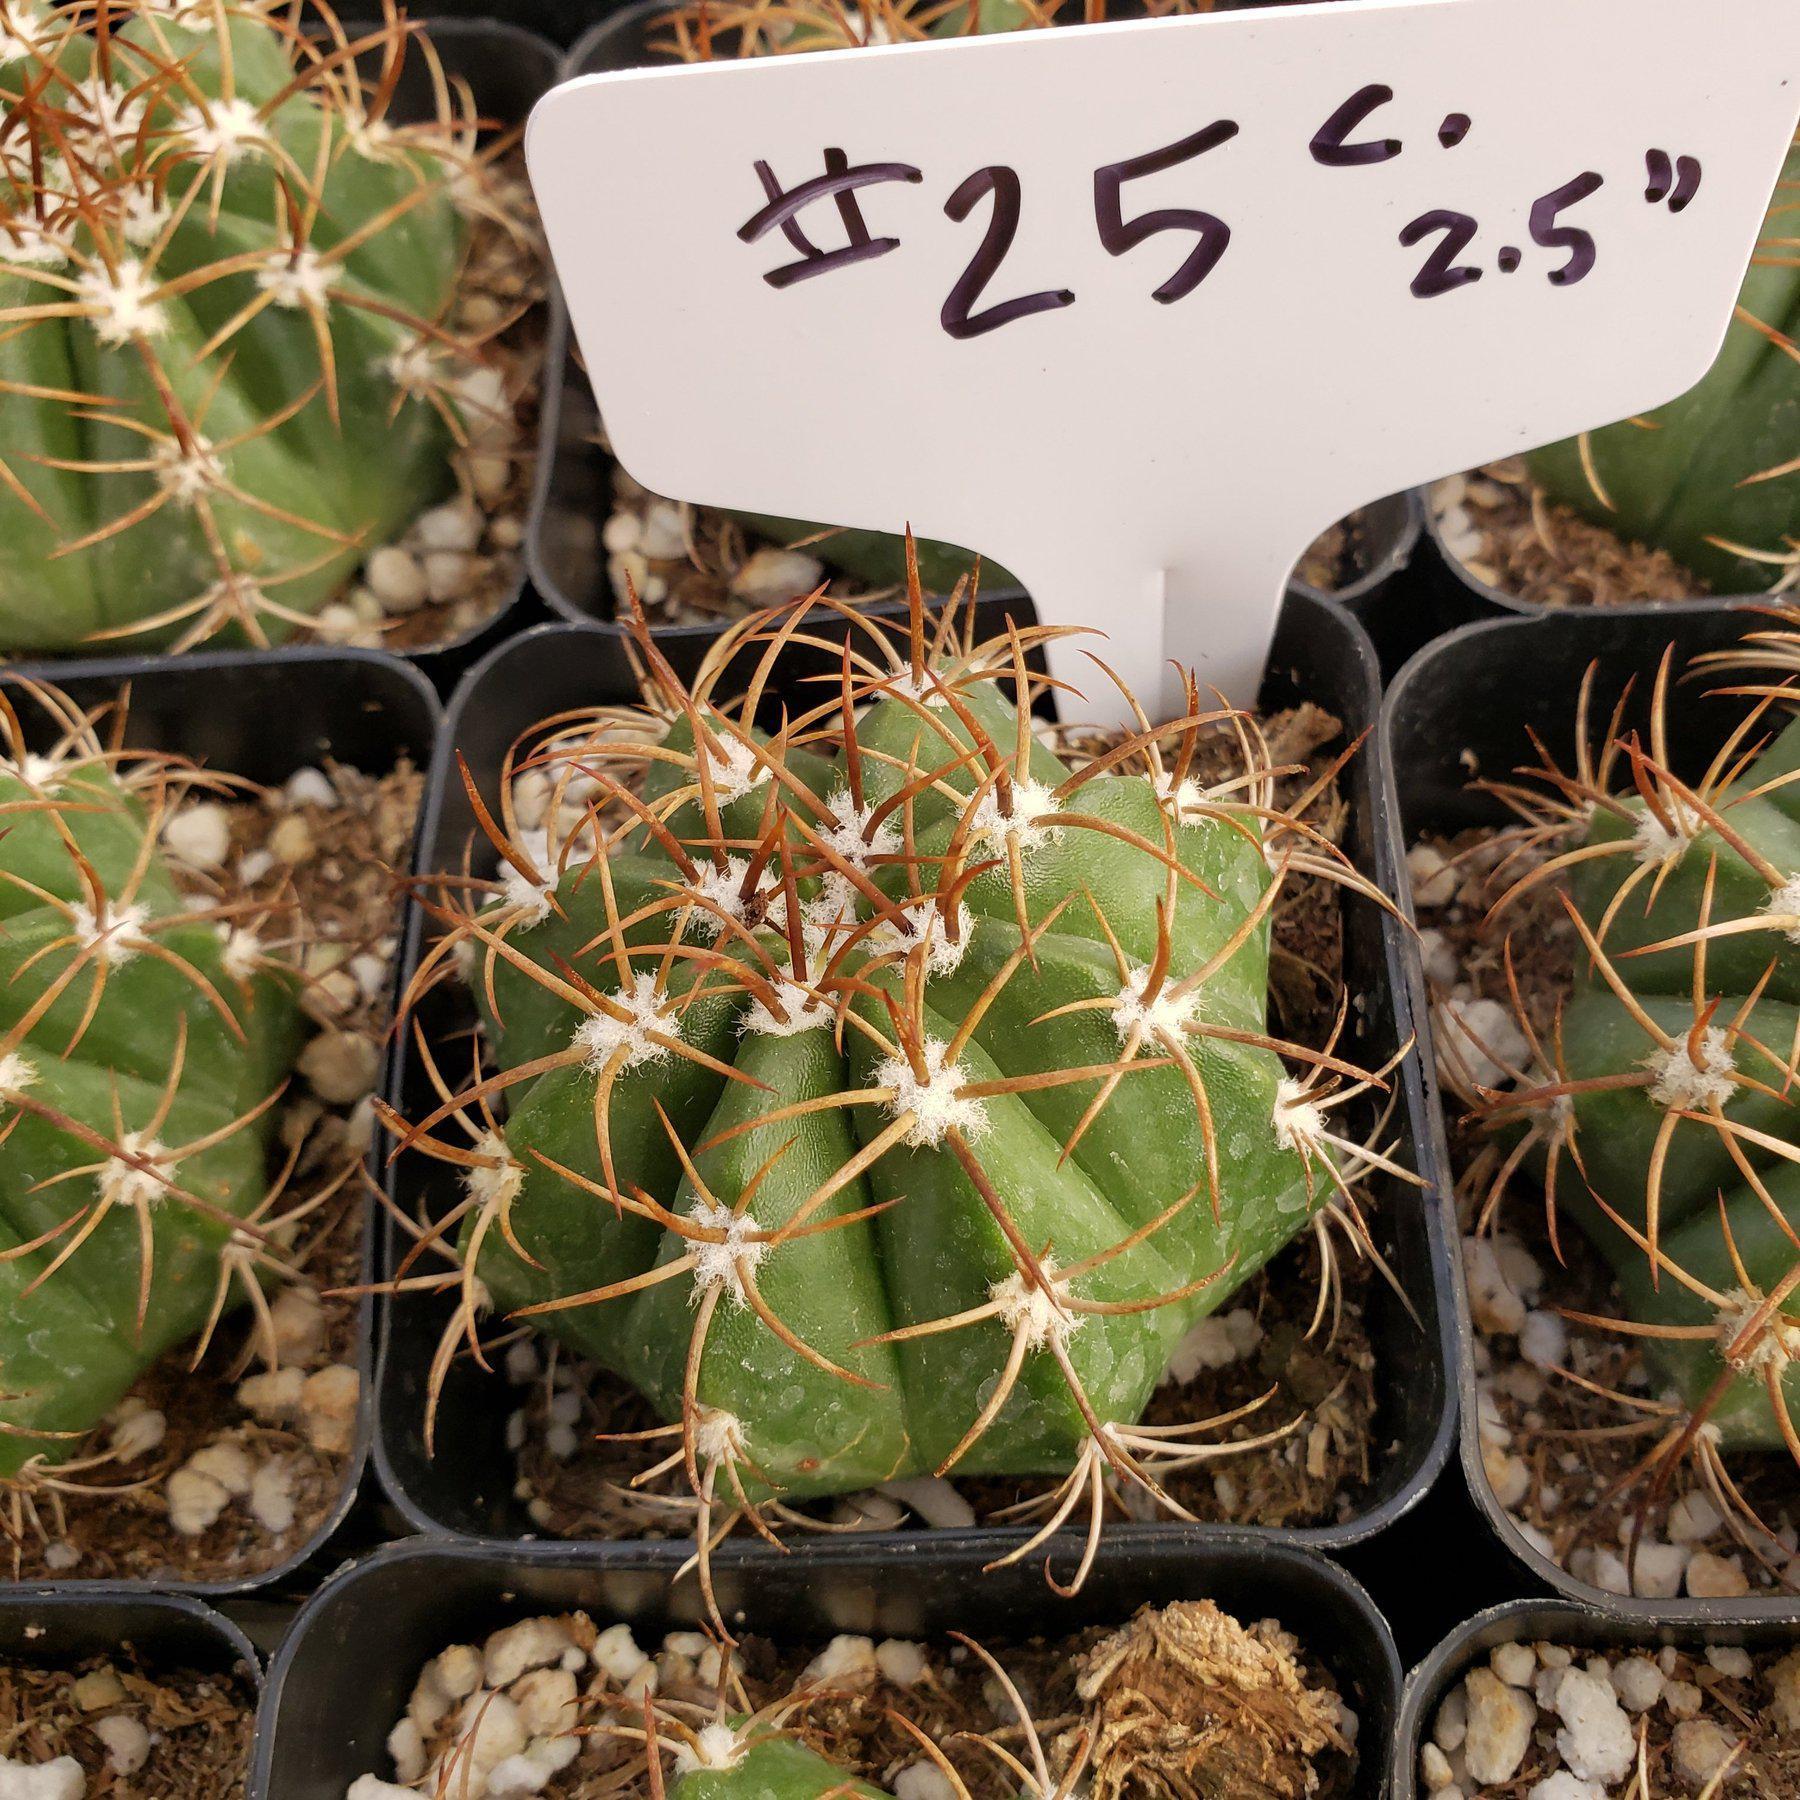 #25C 2.5"-Cactus - Small - Exact Type-The Succulent Source